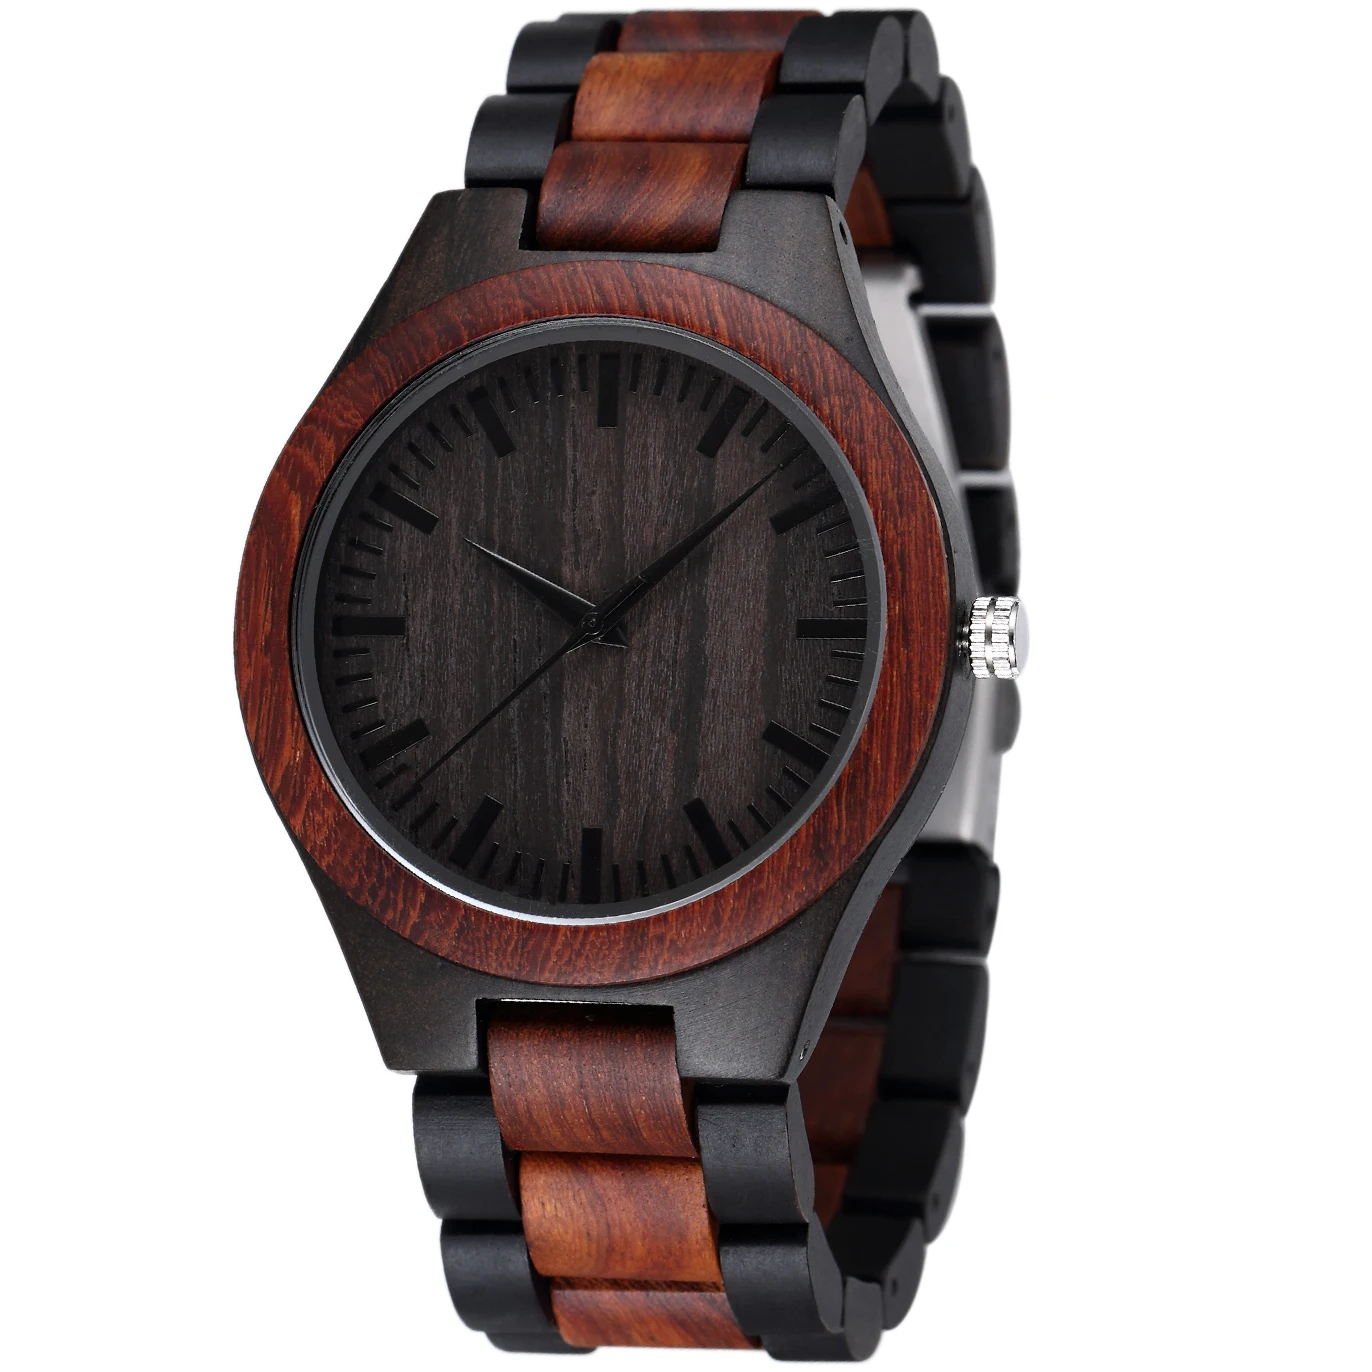 

Reloj De Madera Drop Shipping Custom Wood Watch Drop shipping amazon eBay Aliexpress branded custom wooden watch